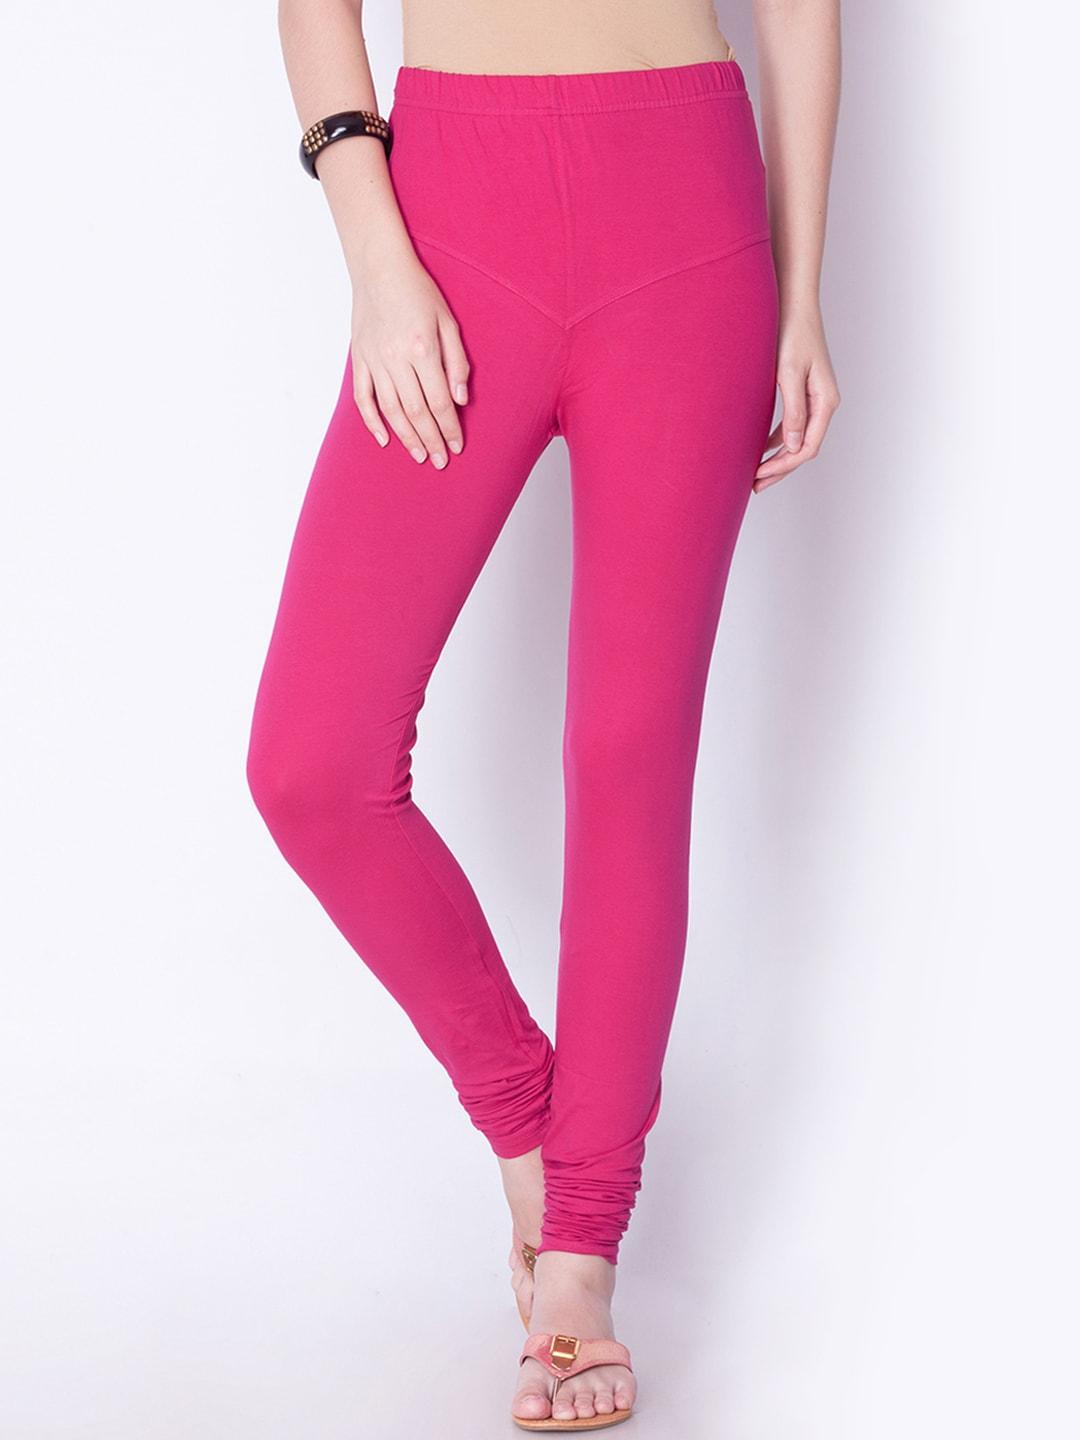 dollar-missy-women-pink-solid-churidar-length-leggings